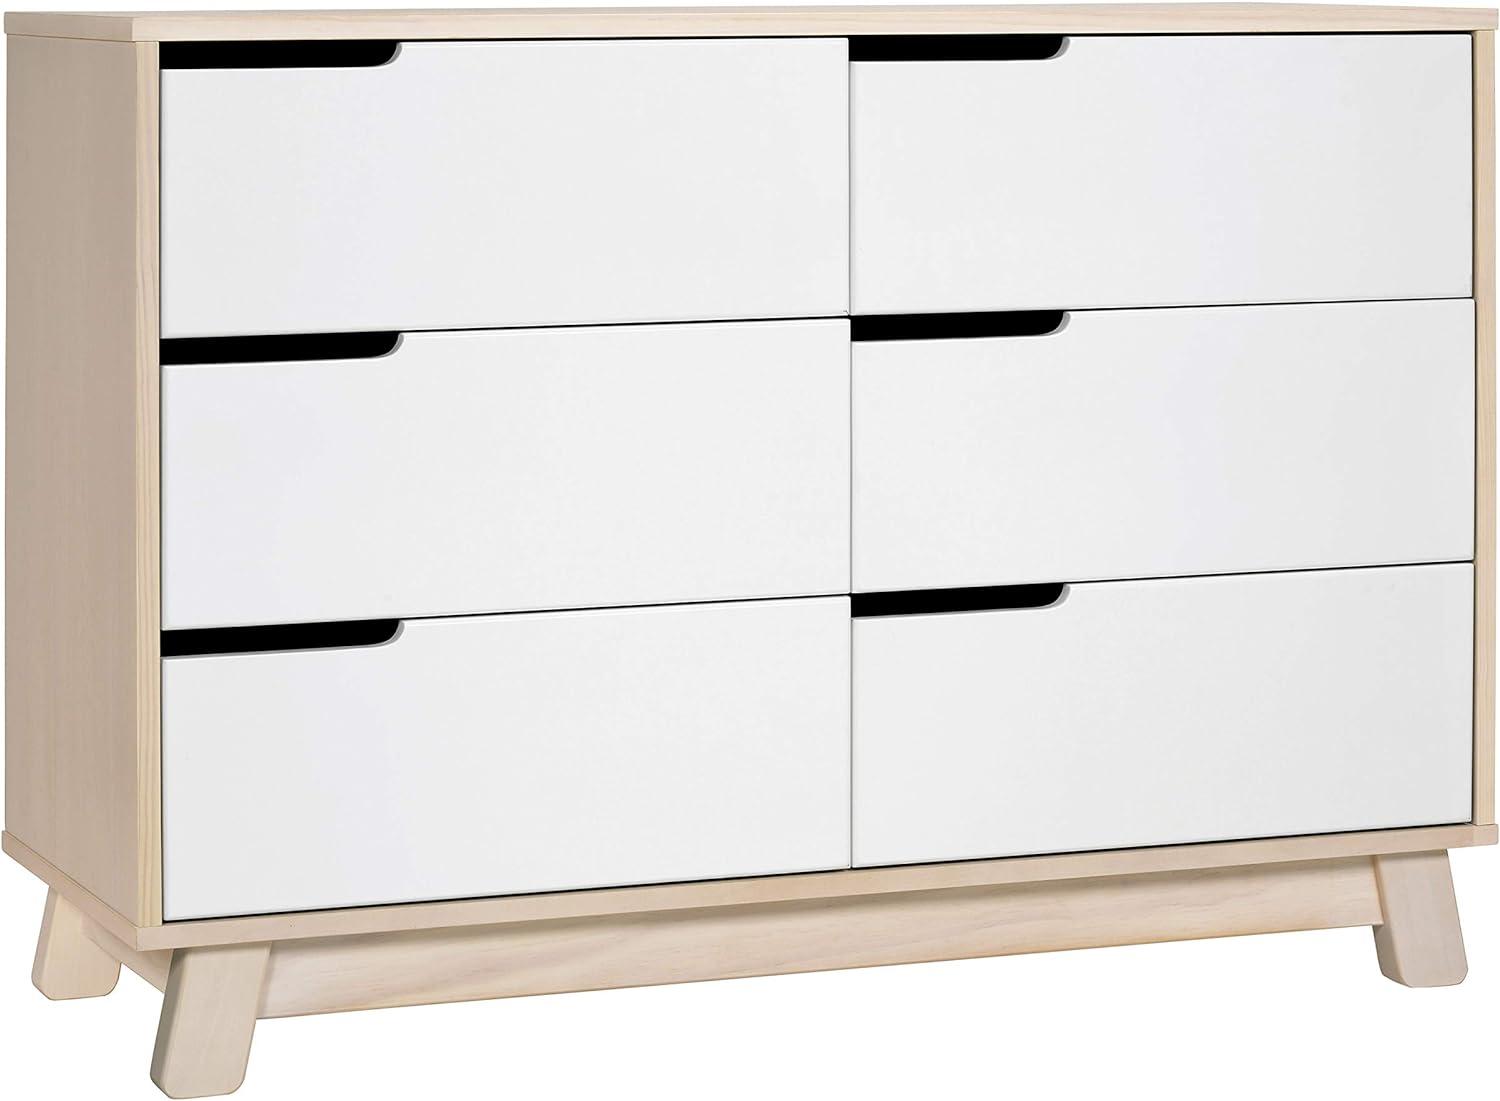 Hudson Mid-Century Modern 6-Drawer Dresser in Washed Natural/White